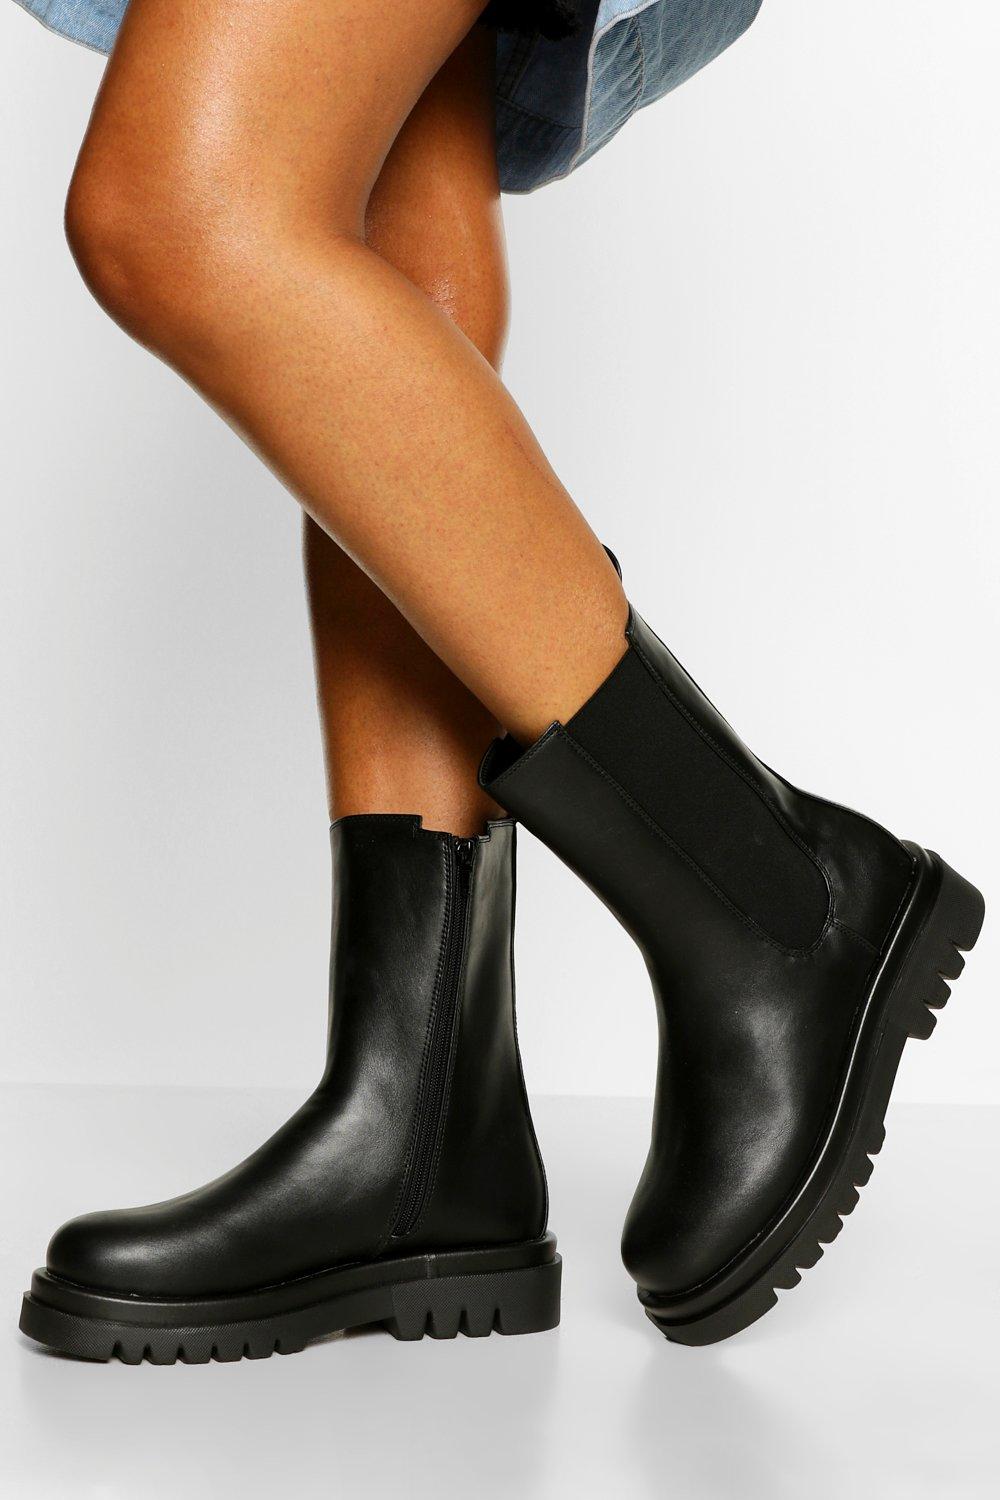 Womens Calf High Chunky Hiker Boots - Black - 8, Black